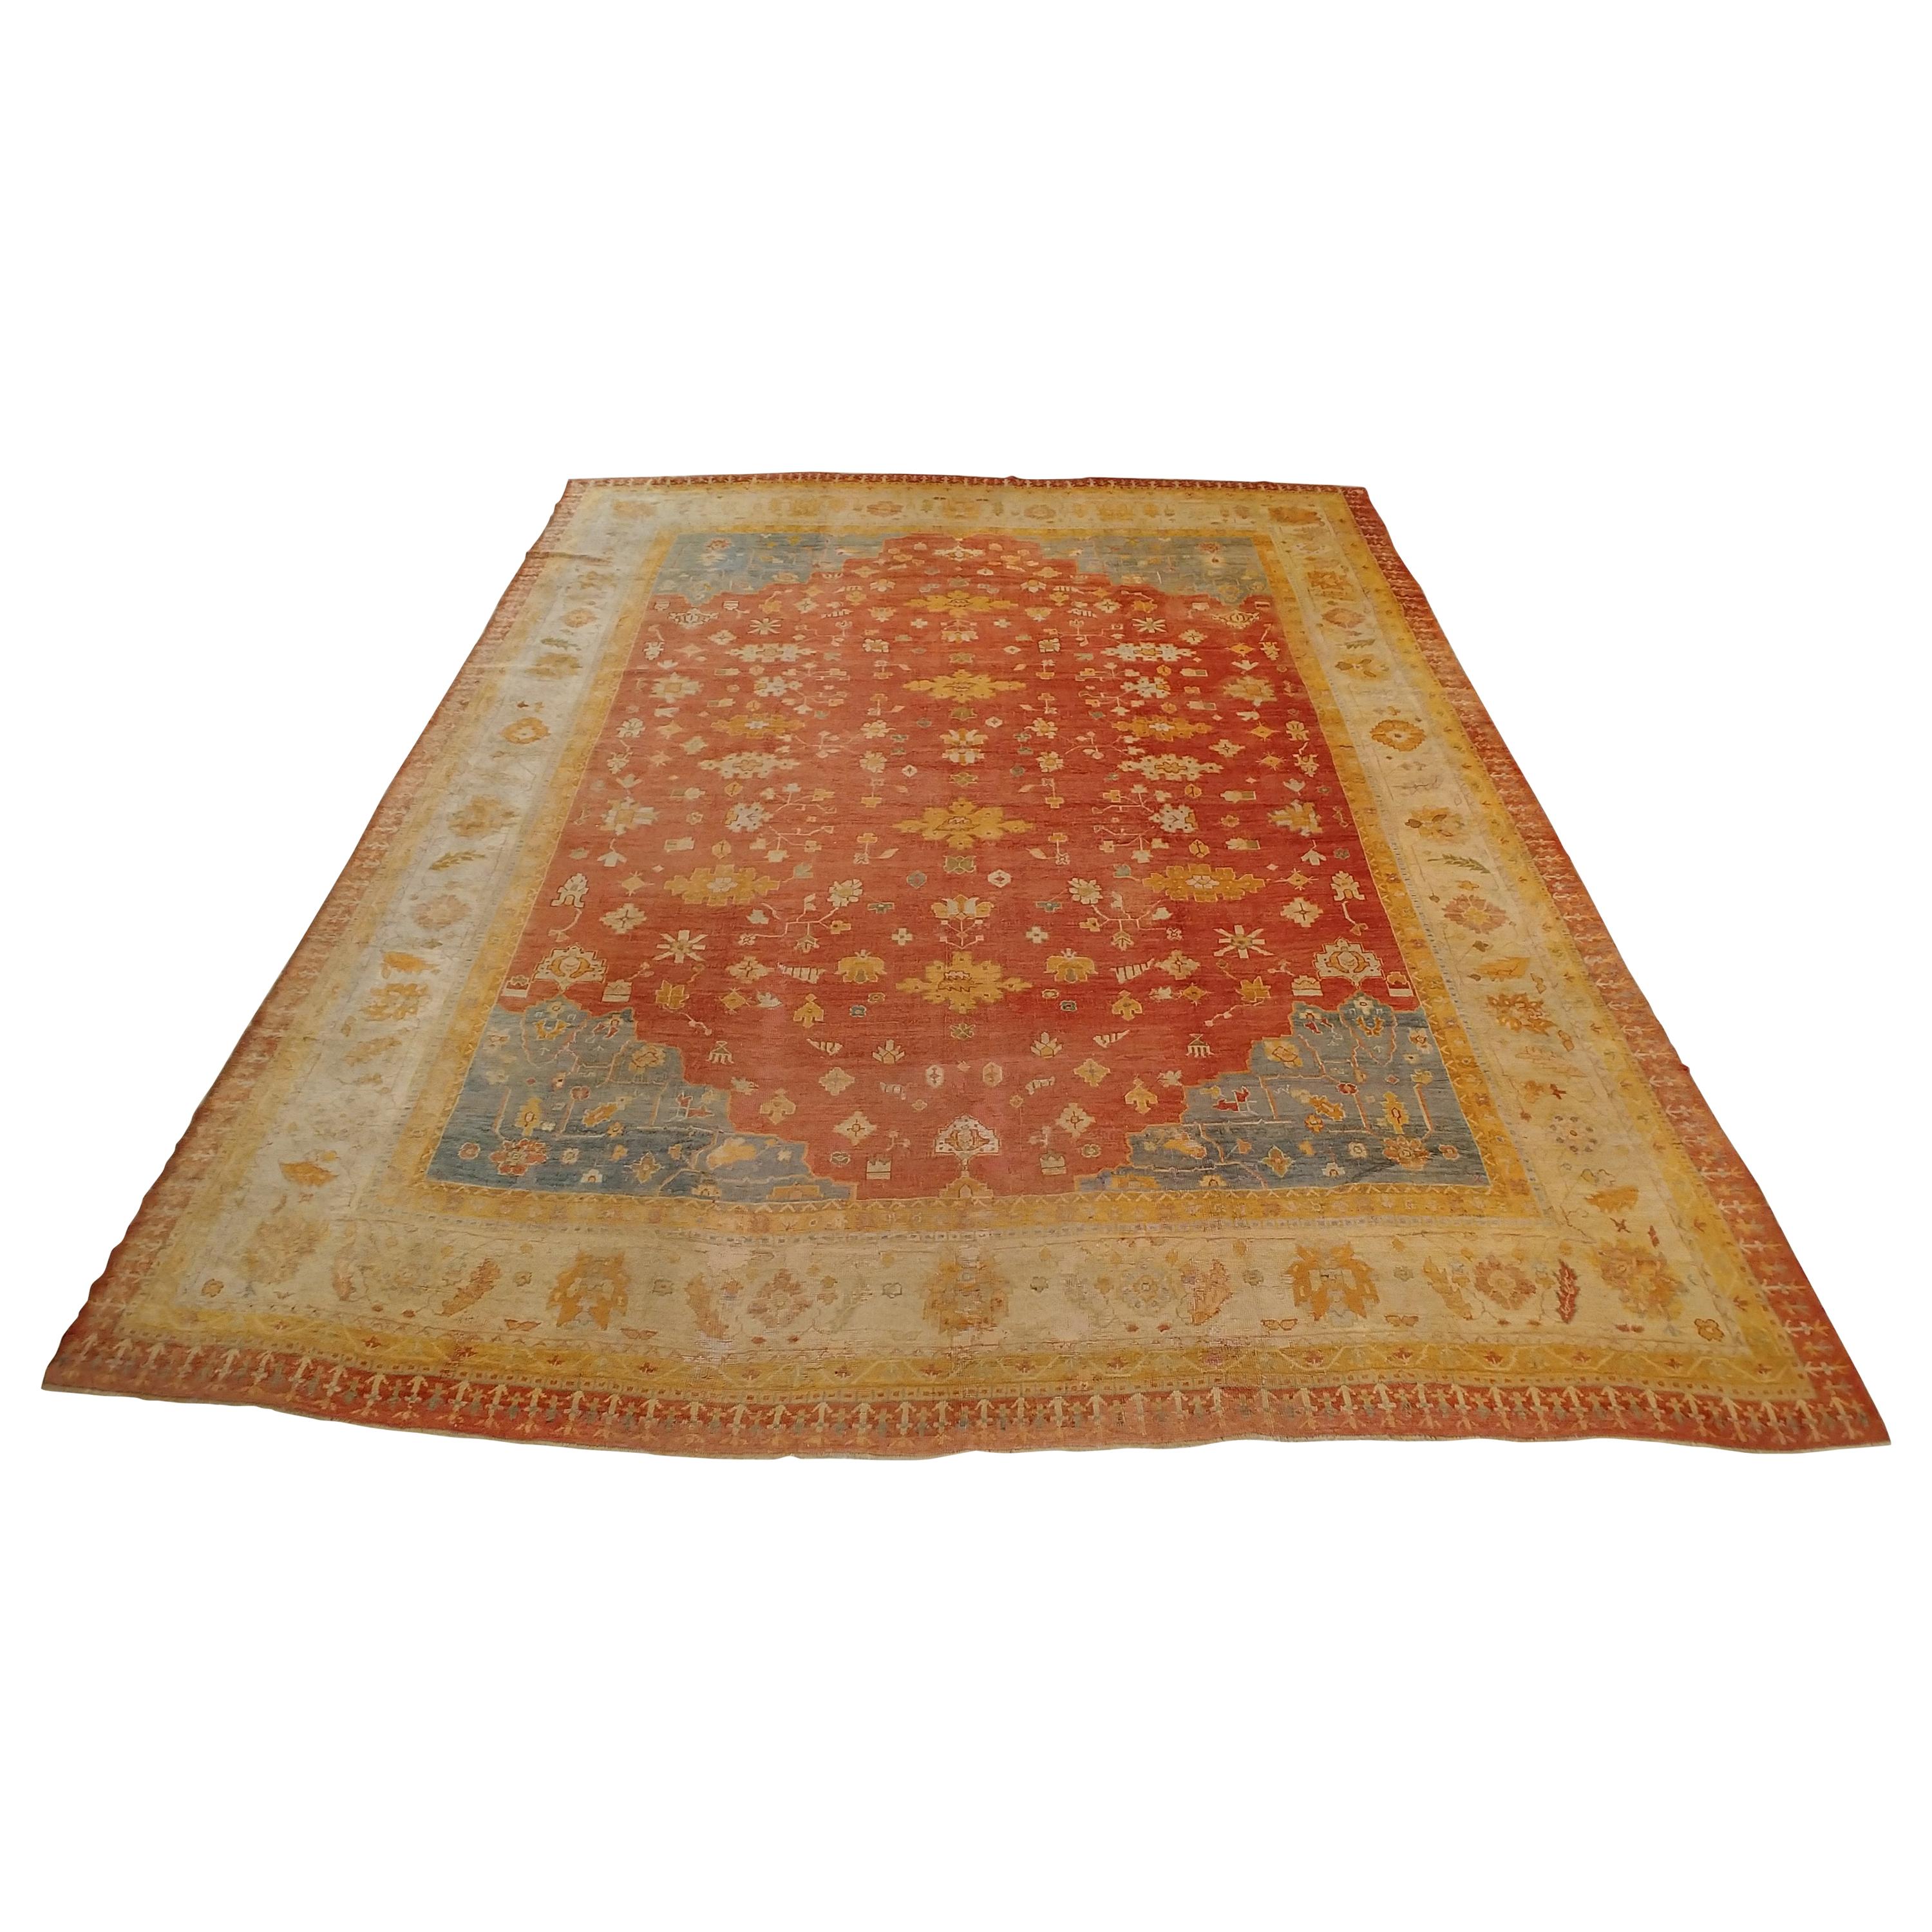 Antique Oushak Carpet, Handmade Turkish Oriental Rug, Beige, Coral, Light Blue